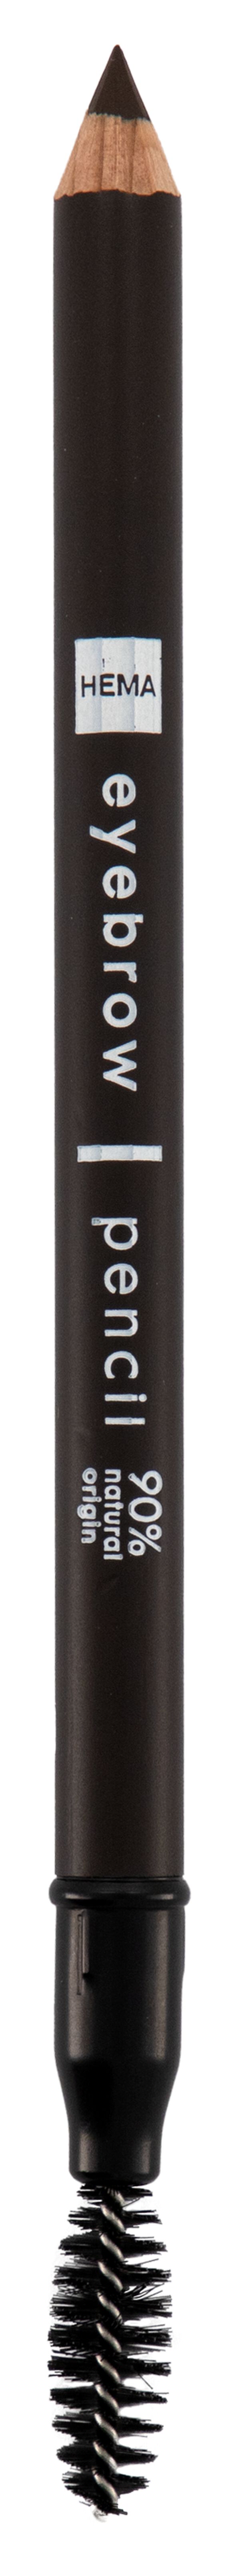 crayon sourcils 86 noir/marron - 11210286 - HEMA